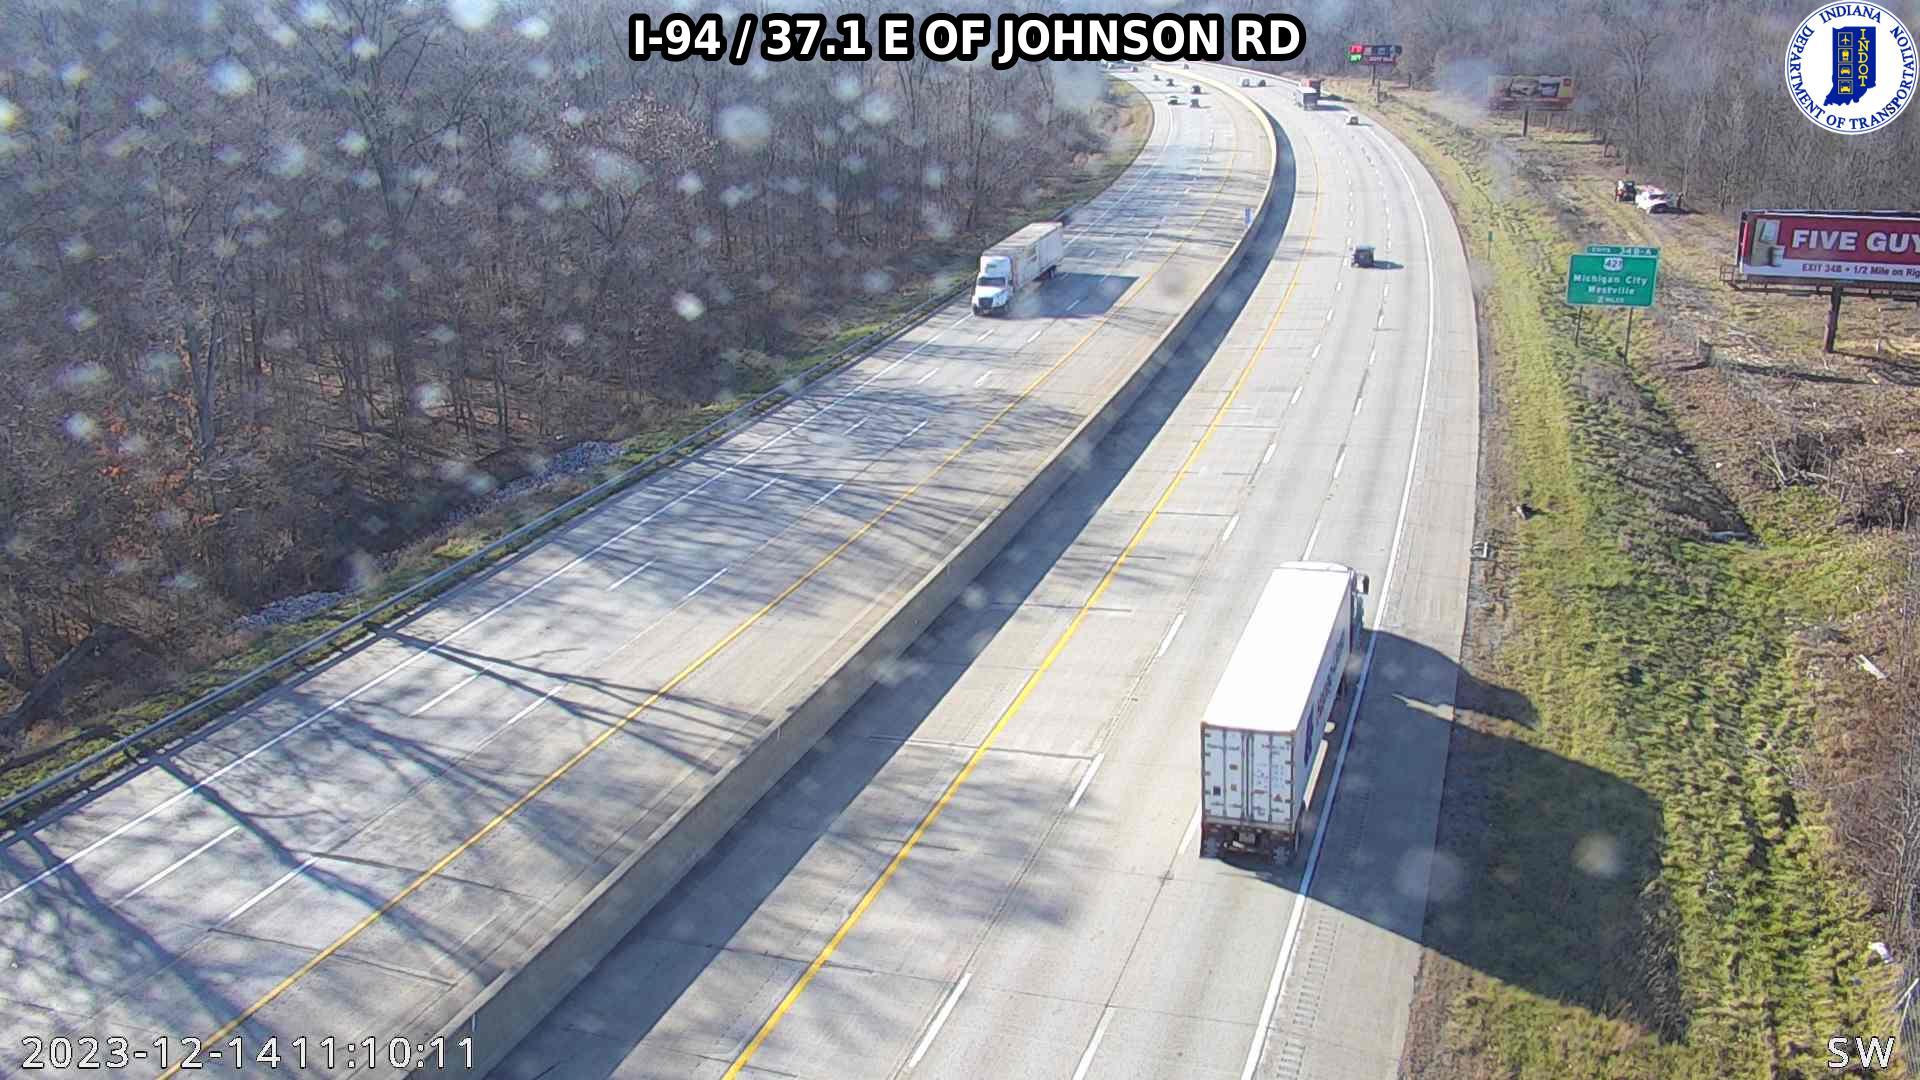 Waterford: I-94: I-94 - 37.1 E OF JOHNSON RD: I-94 - 37.1 E OF JOHNSON RD Traffic Camera